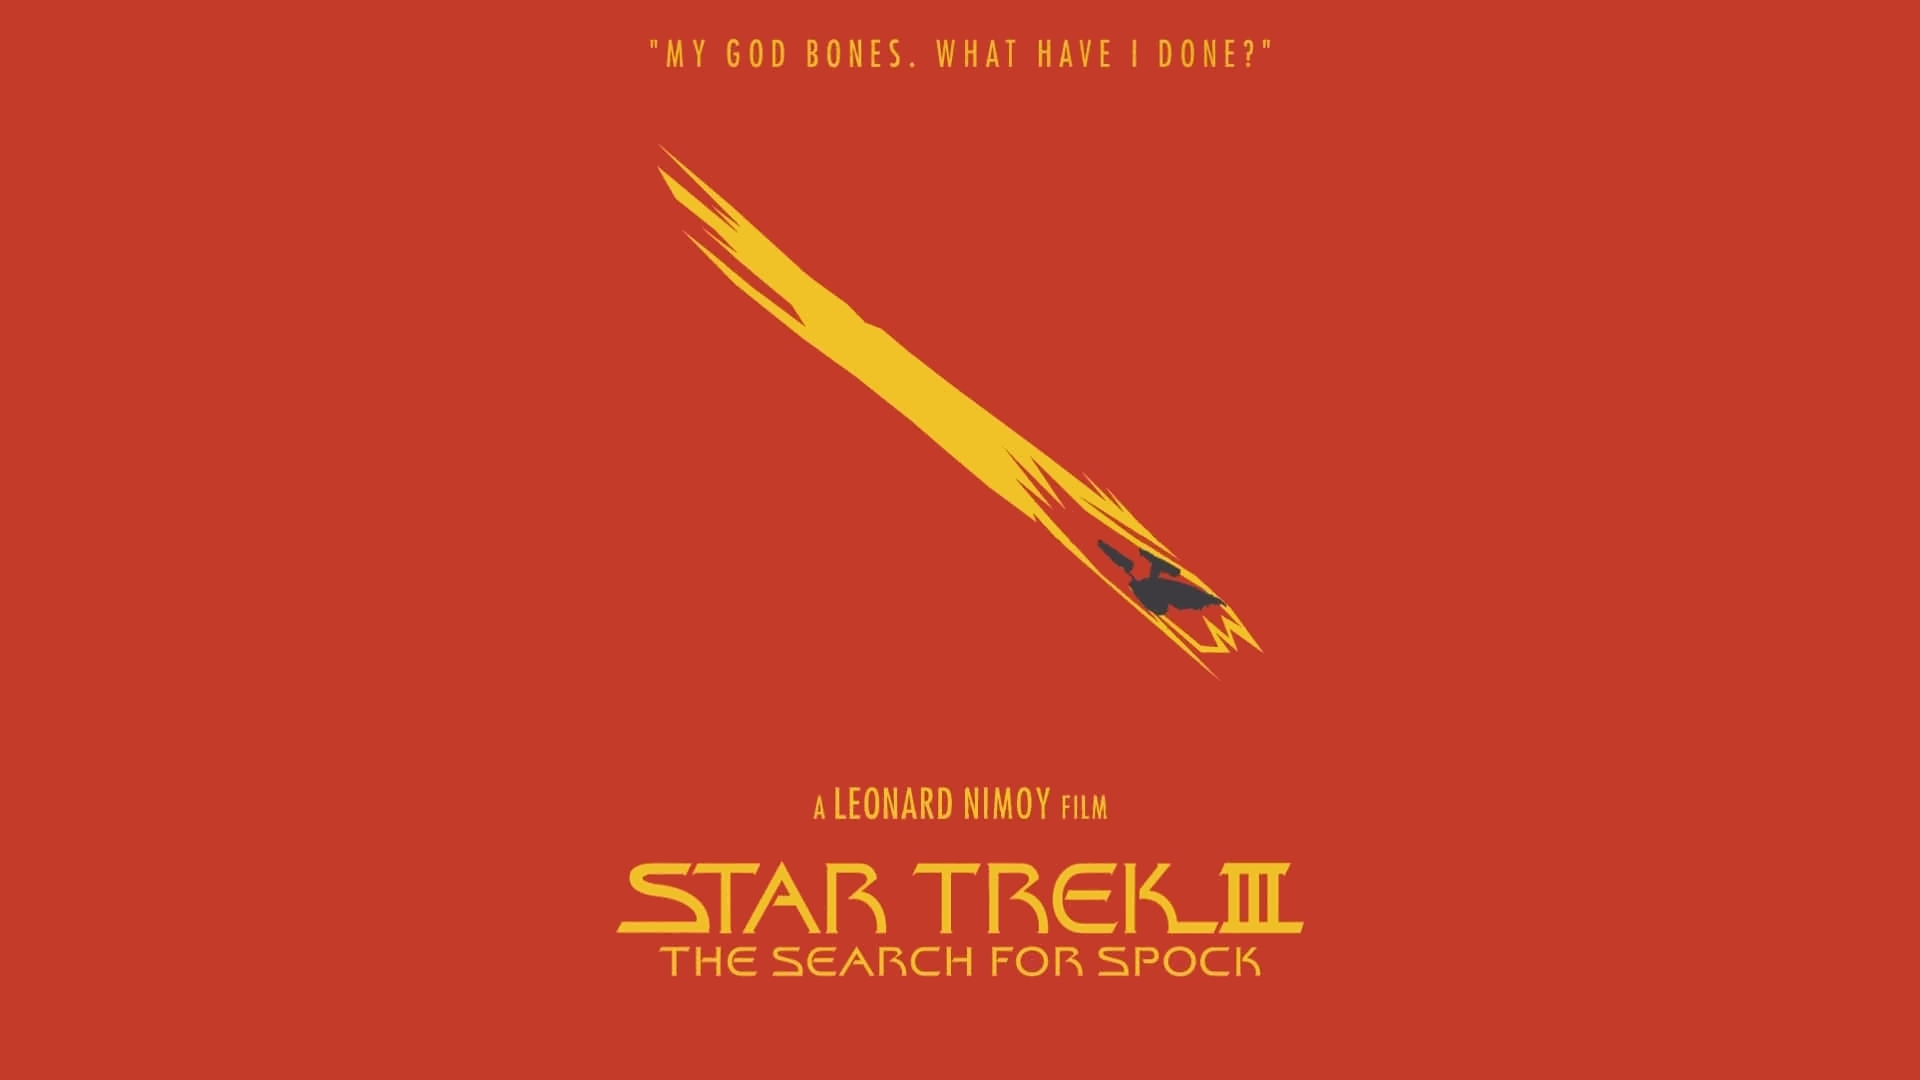 movie, star trek iii: the search for spock, star trek